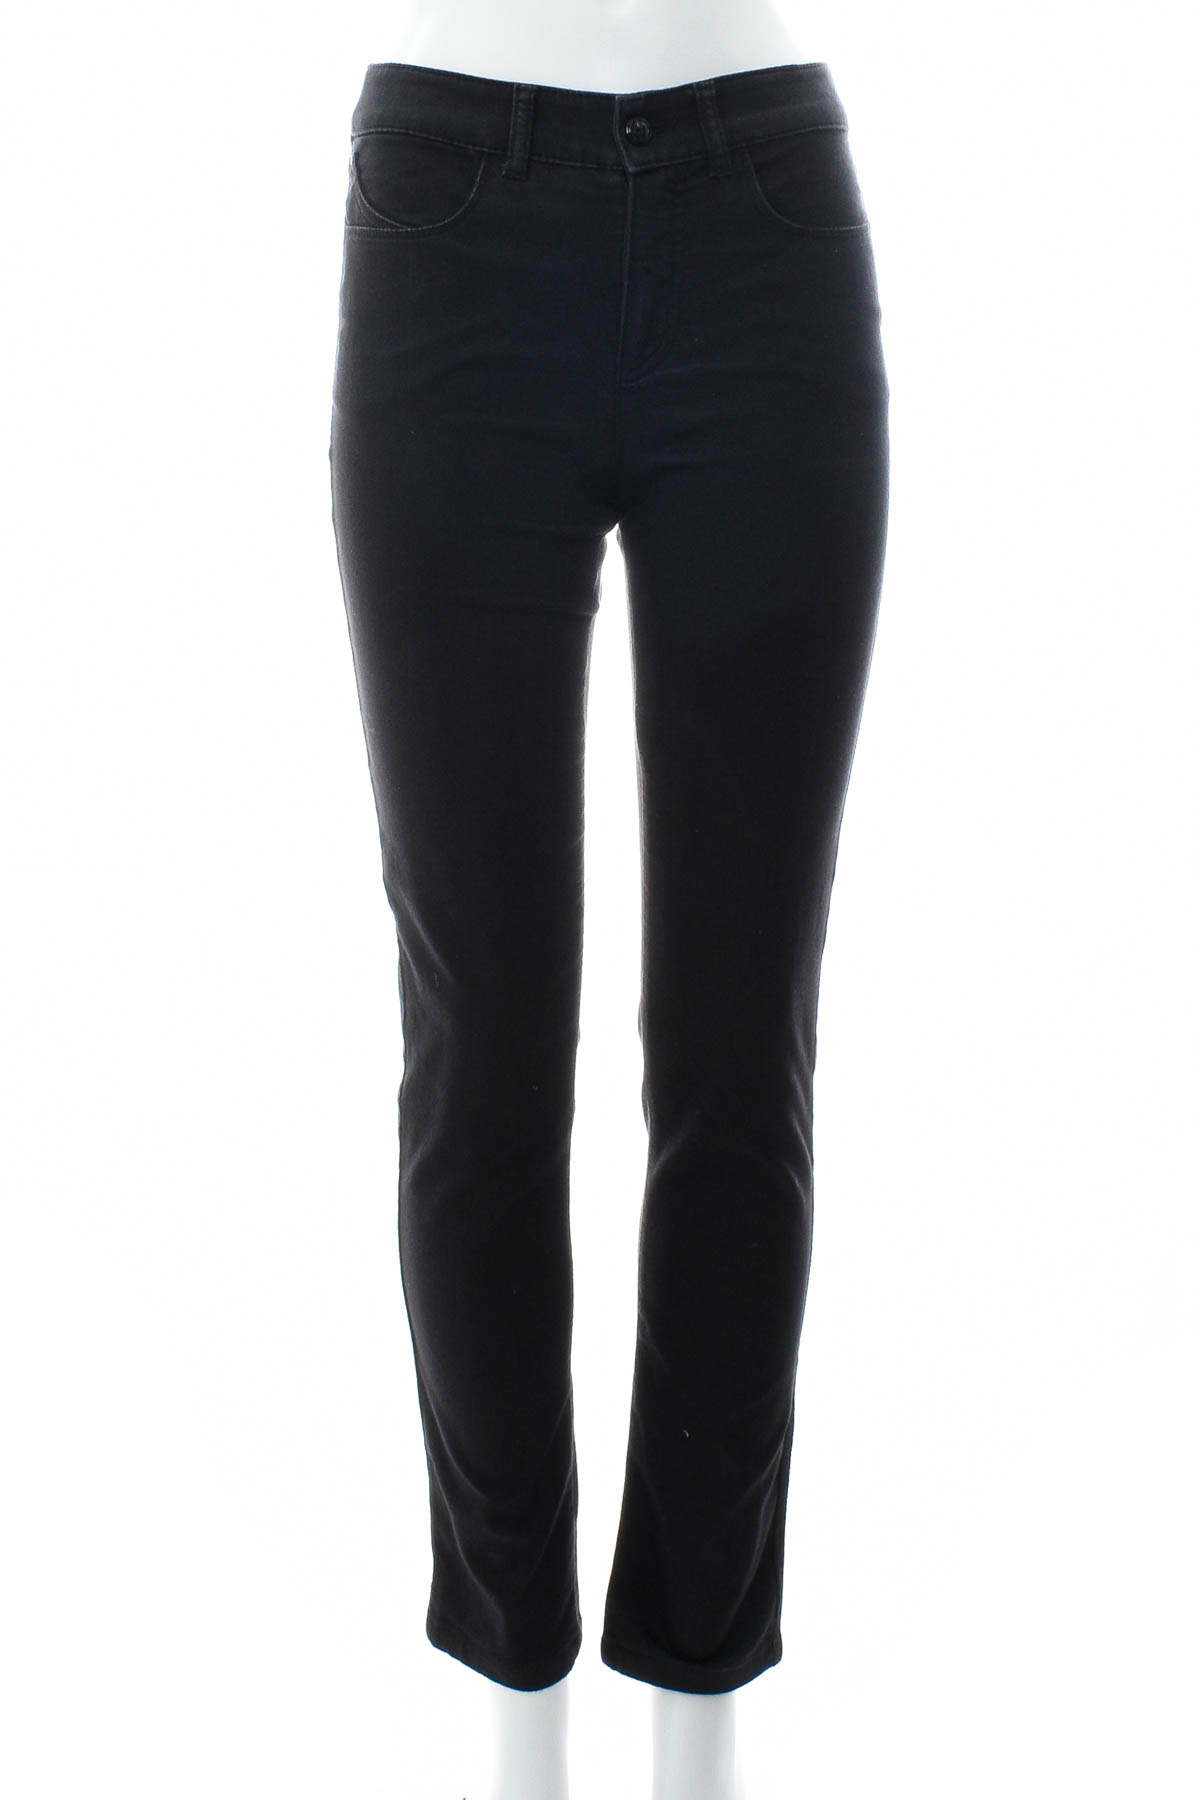 Women's trousers - Armani Jeans - 0